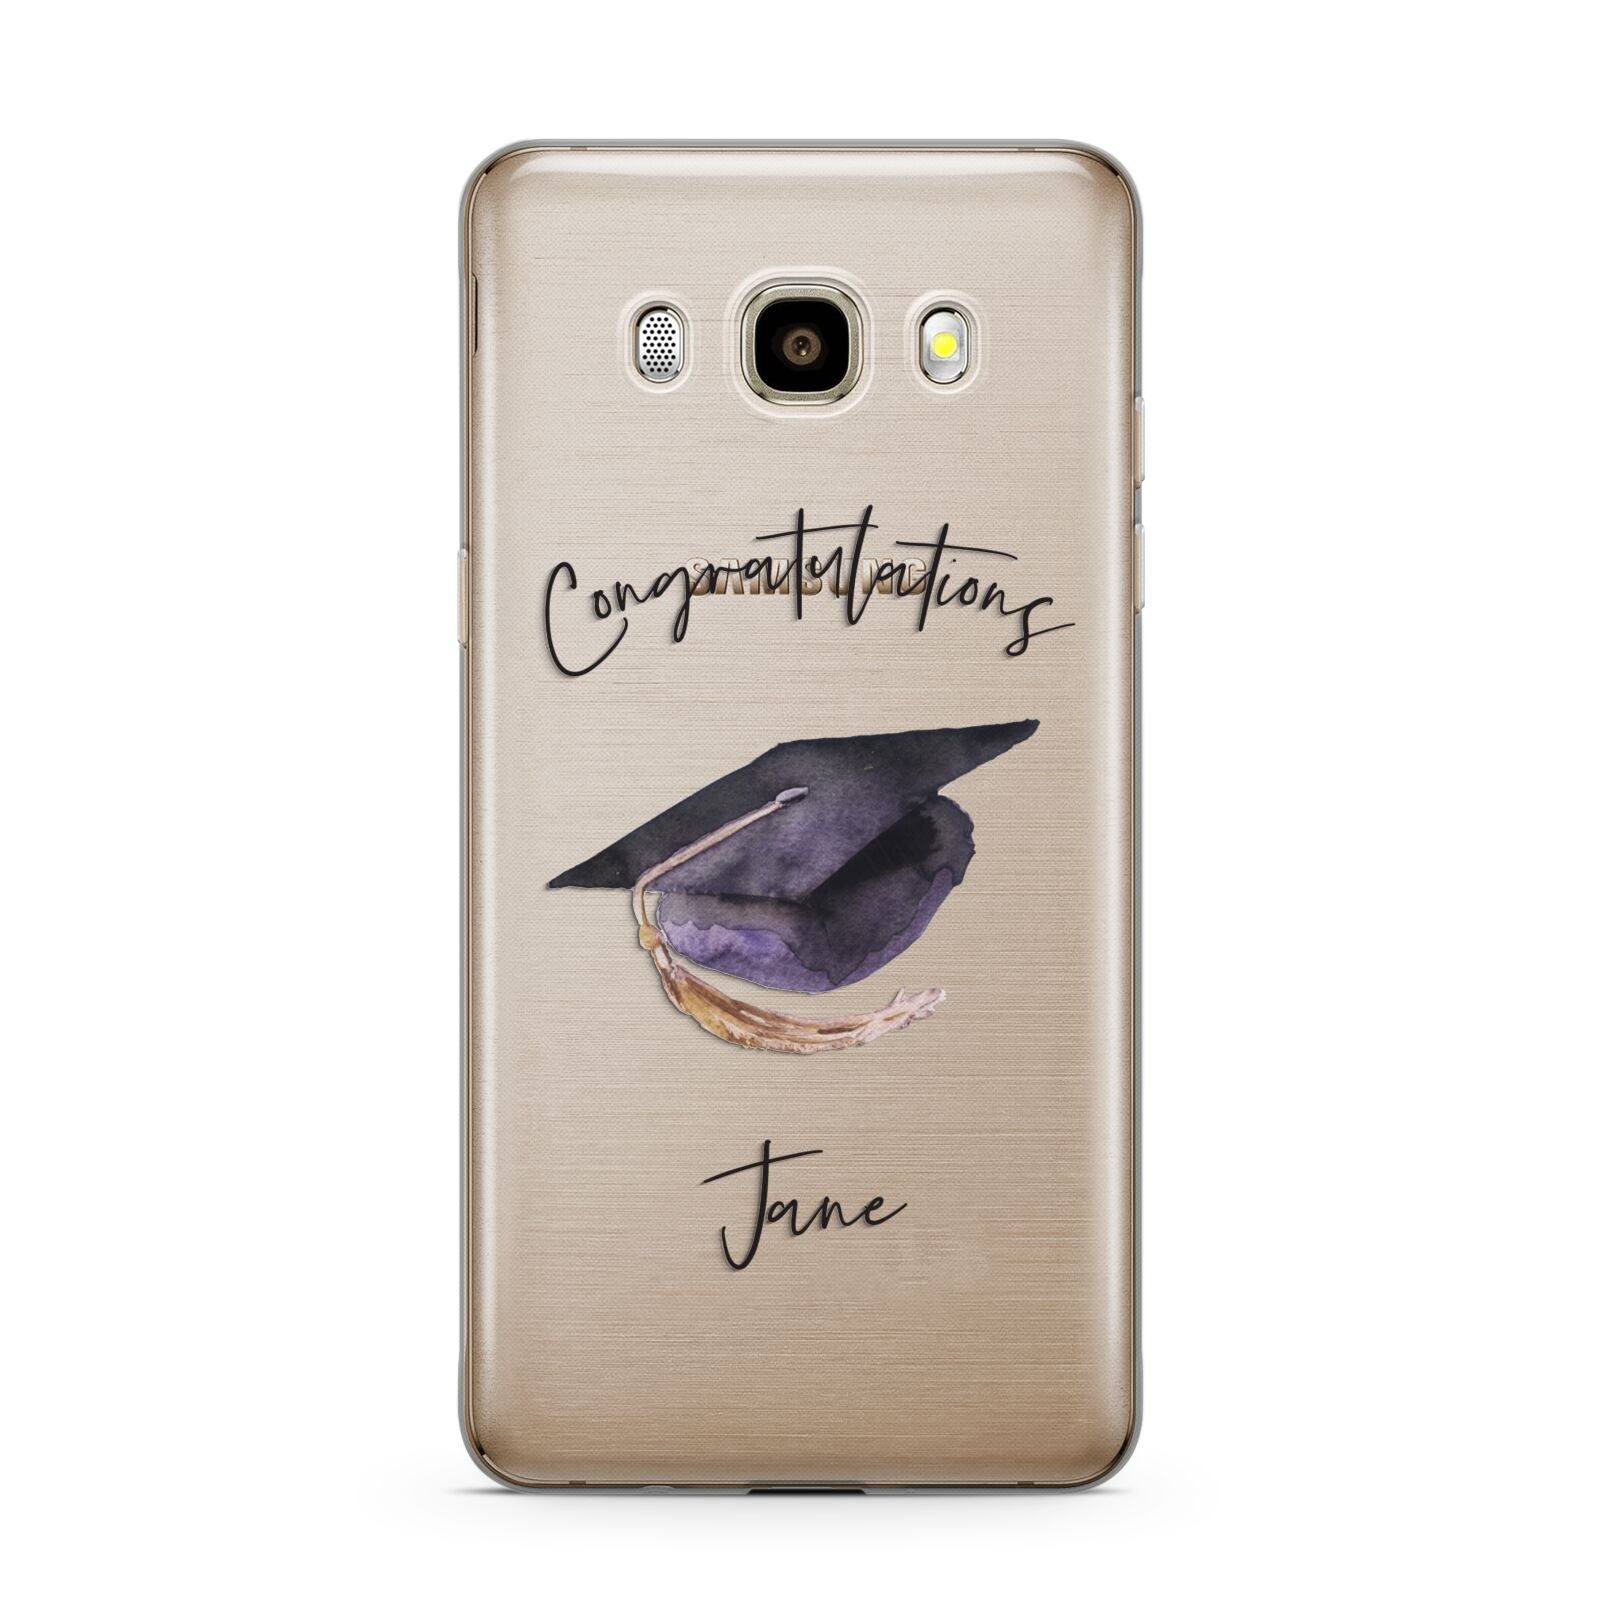 Congratulations Graduate Custom Samsung Galaxy J7 2016 Case on gold phone